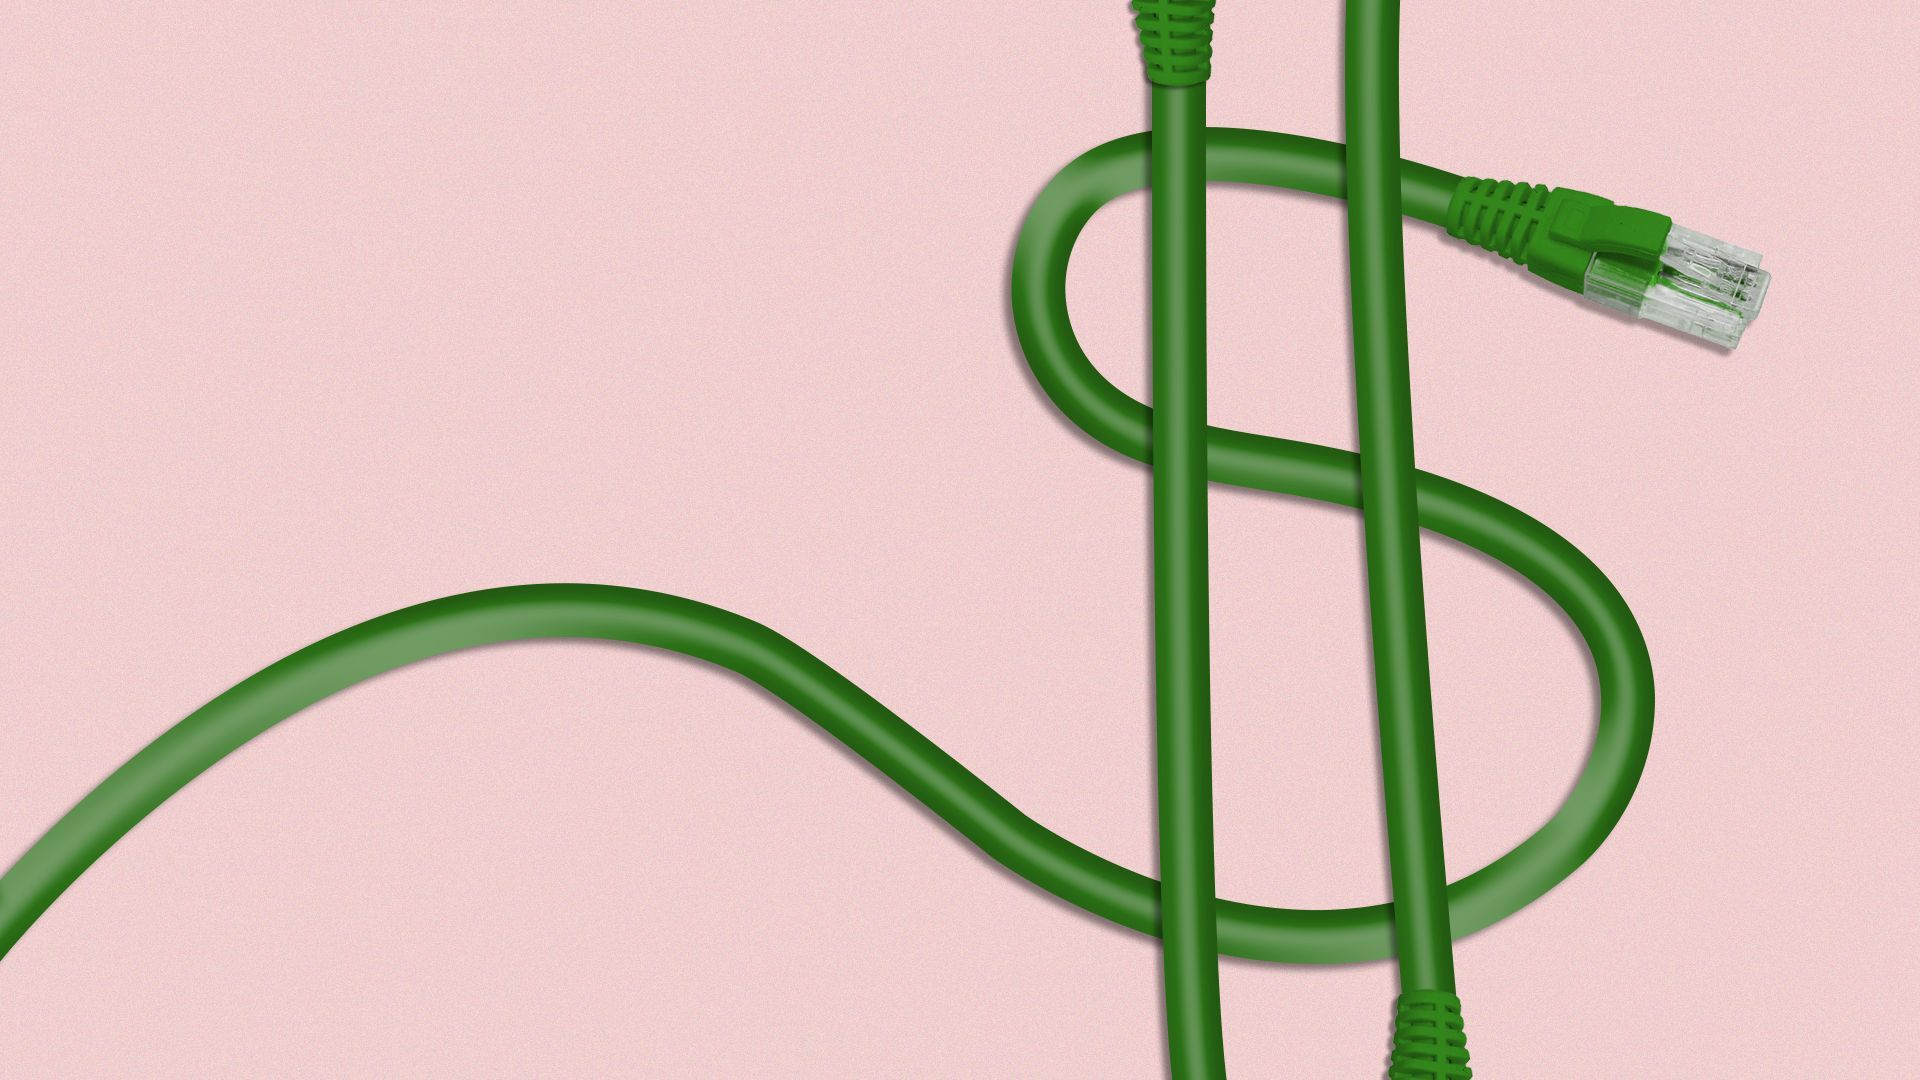 Illustration ethernet cables forming a dollar sign.